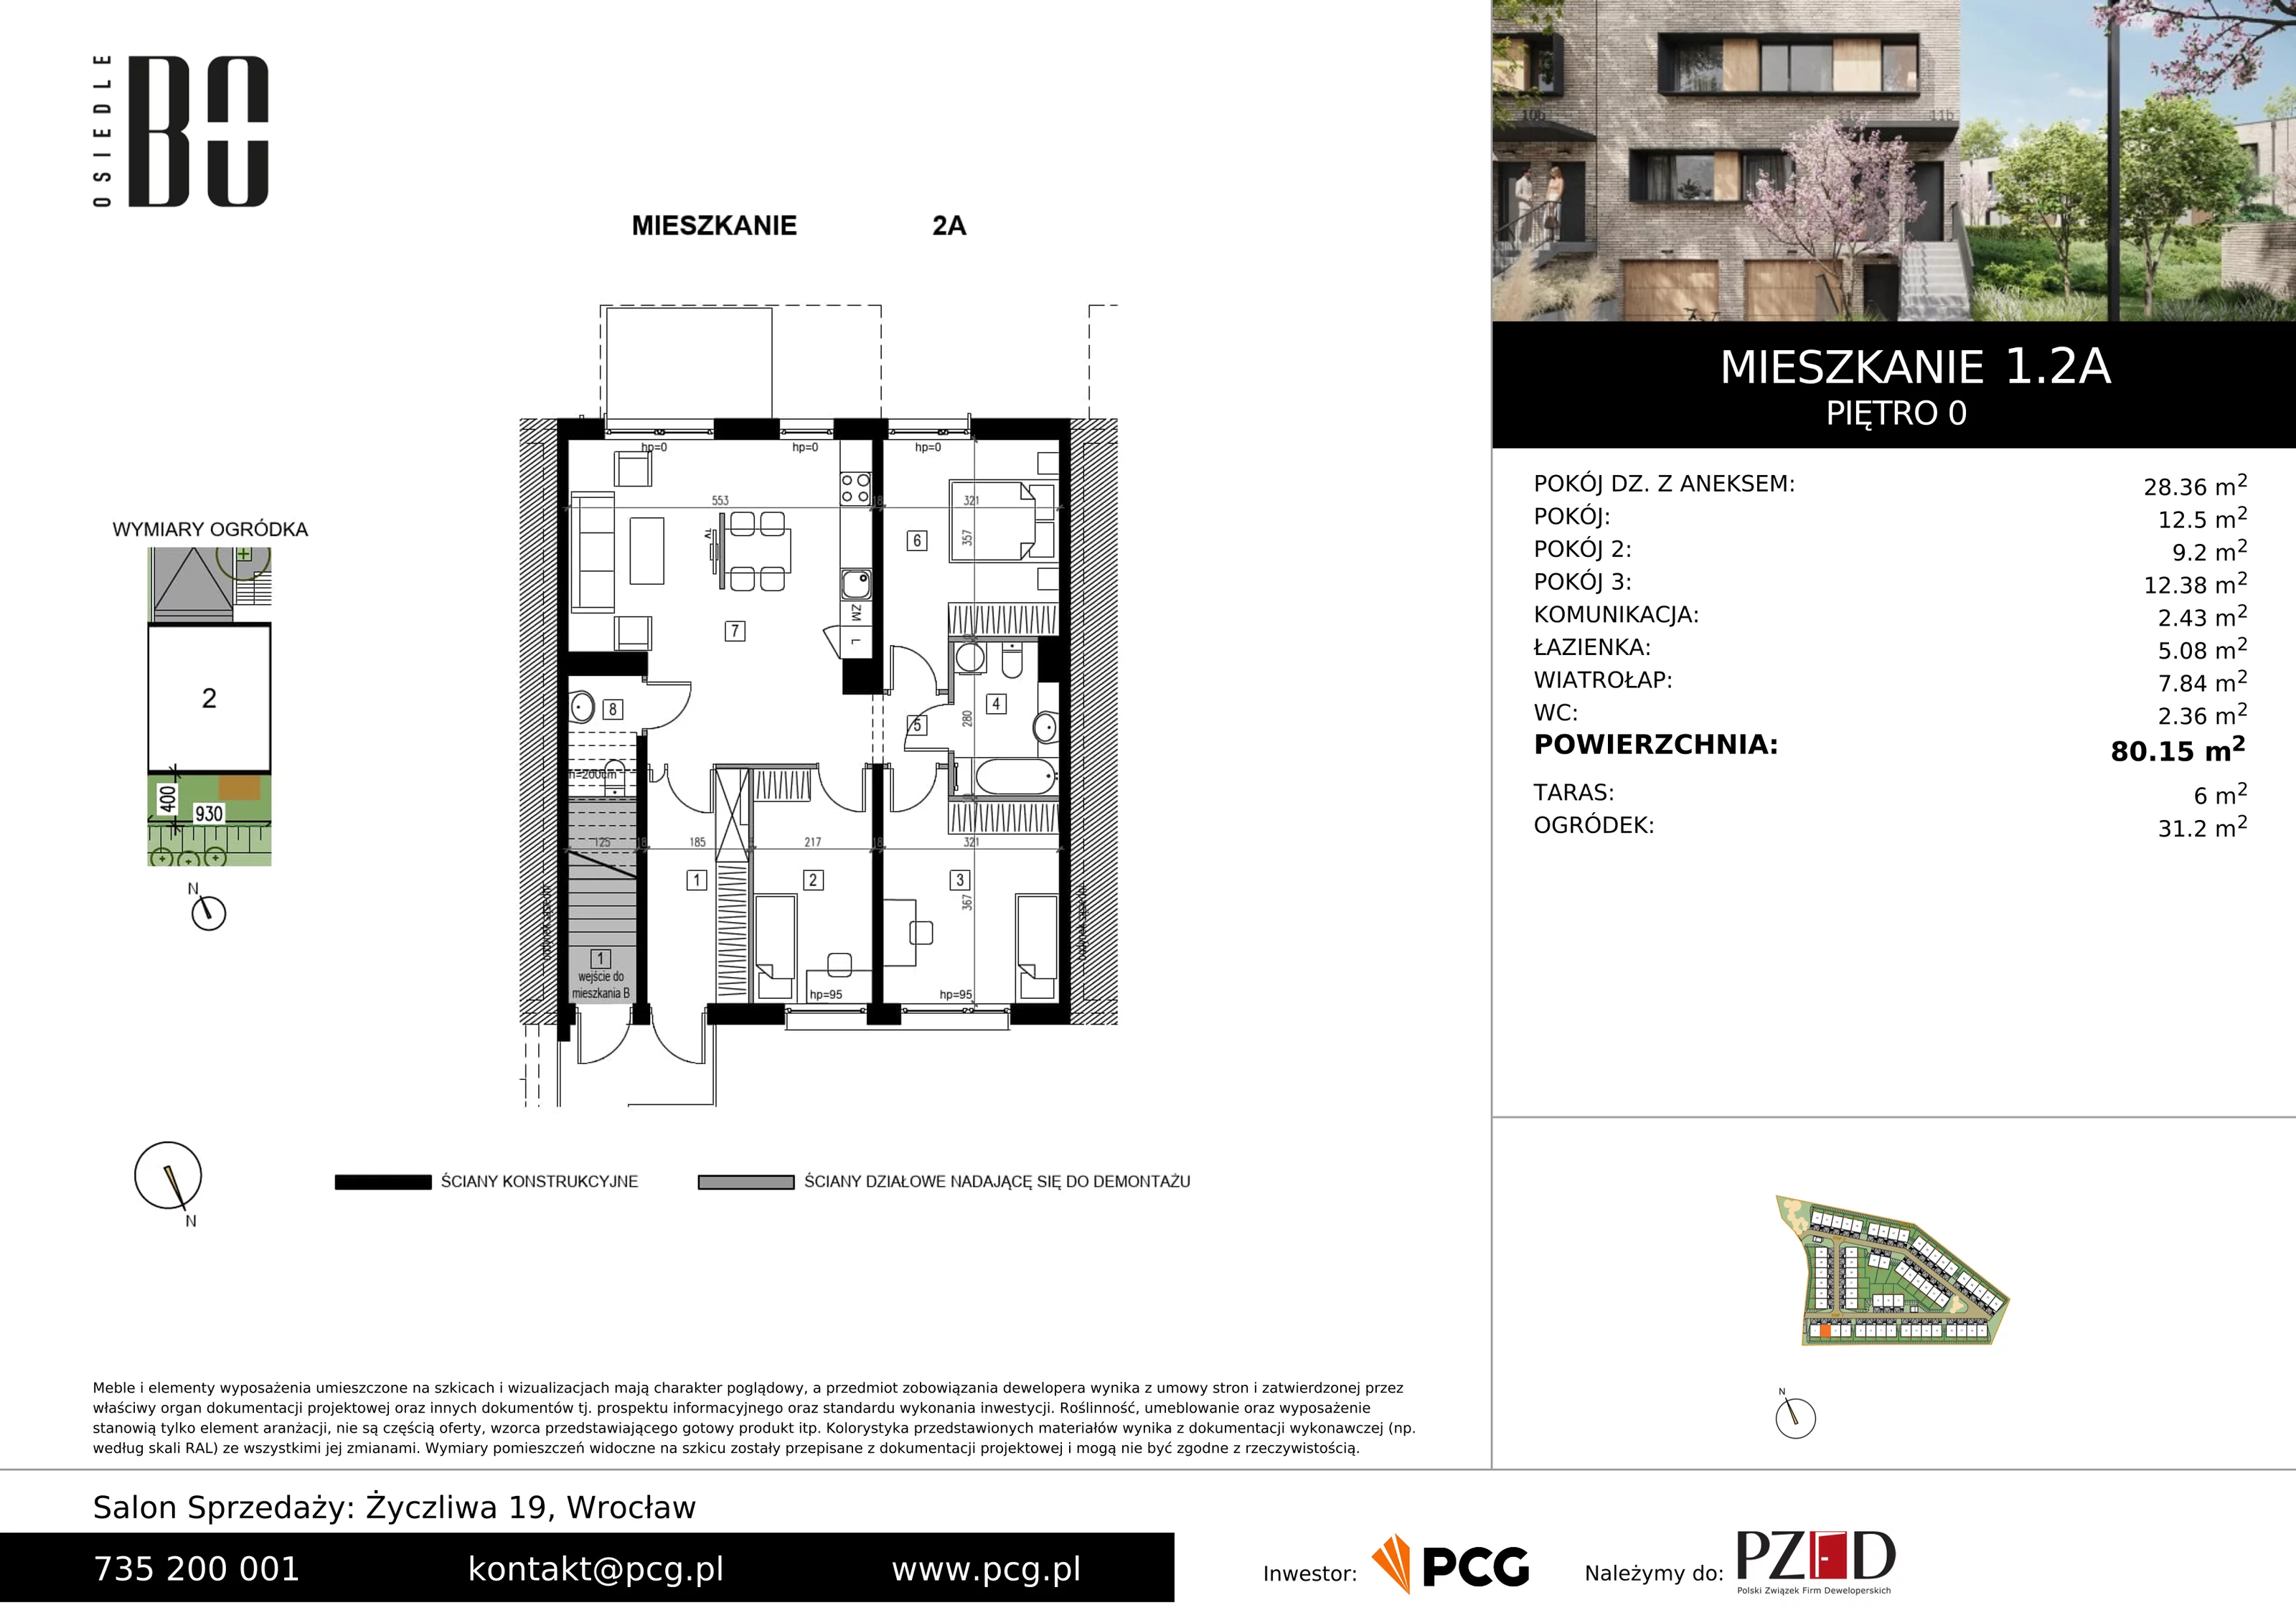 Apartament 80,15 m², parter, oferta nr 1.2A, Osiedle BO, Wrocław, Kowale, ul. Bociana